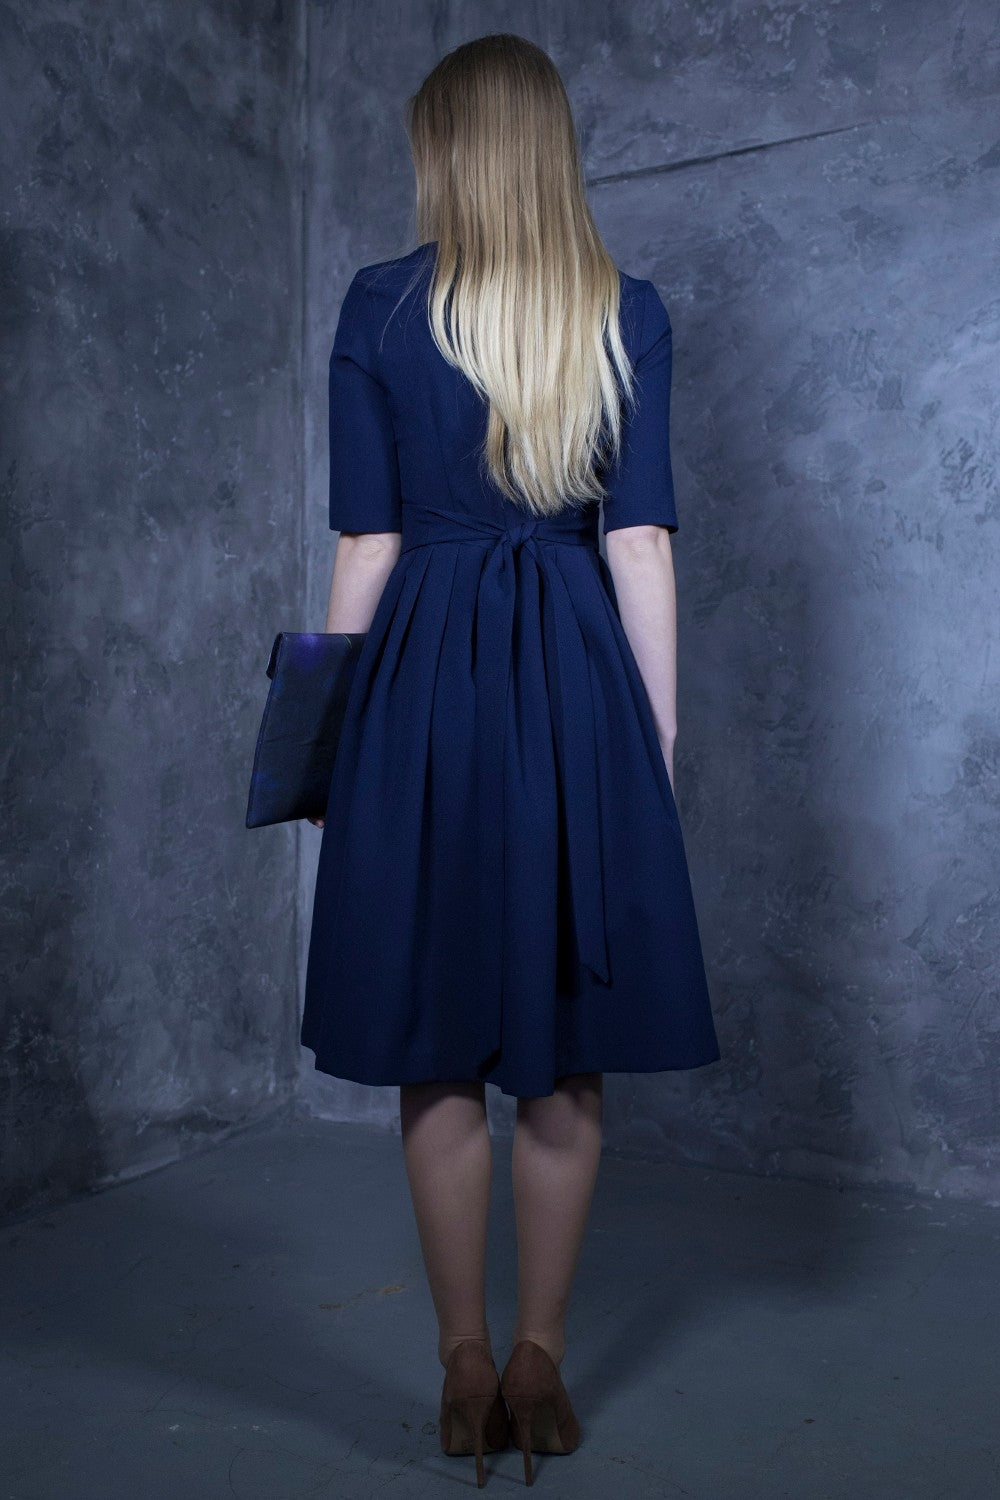 Dark blue dress with pleats